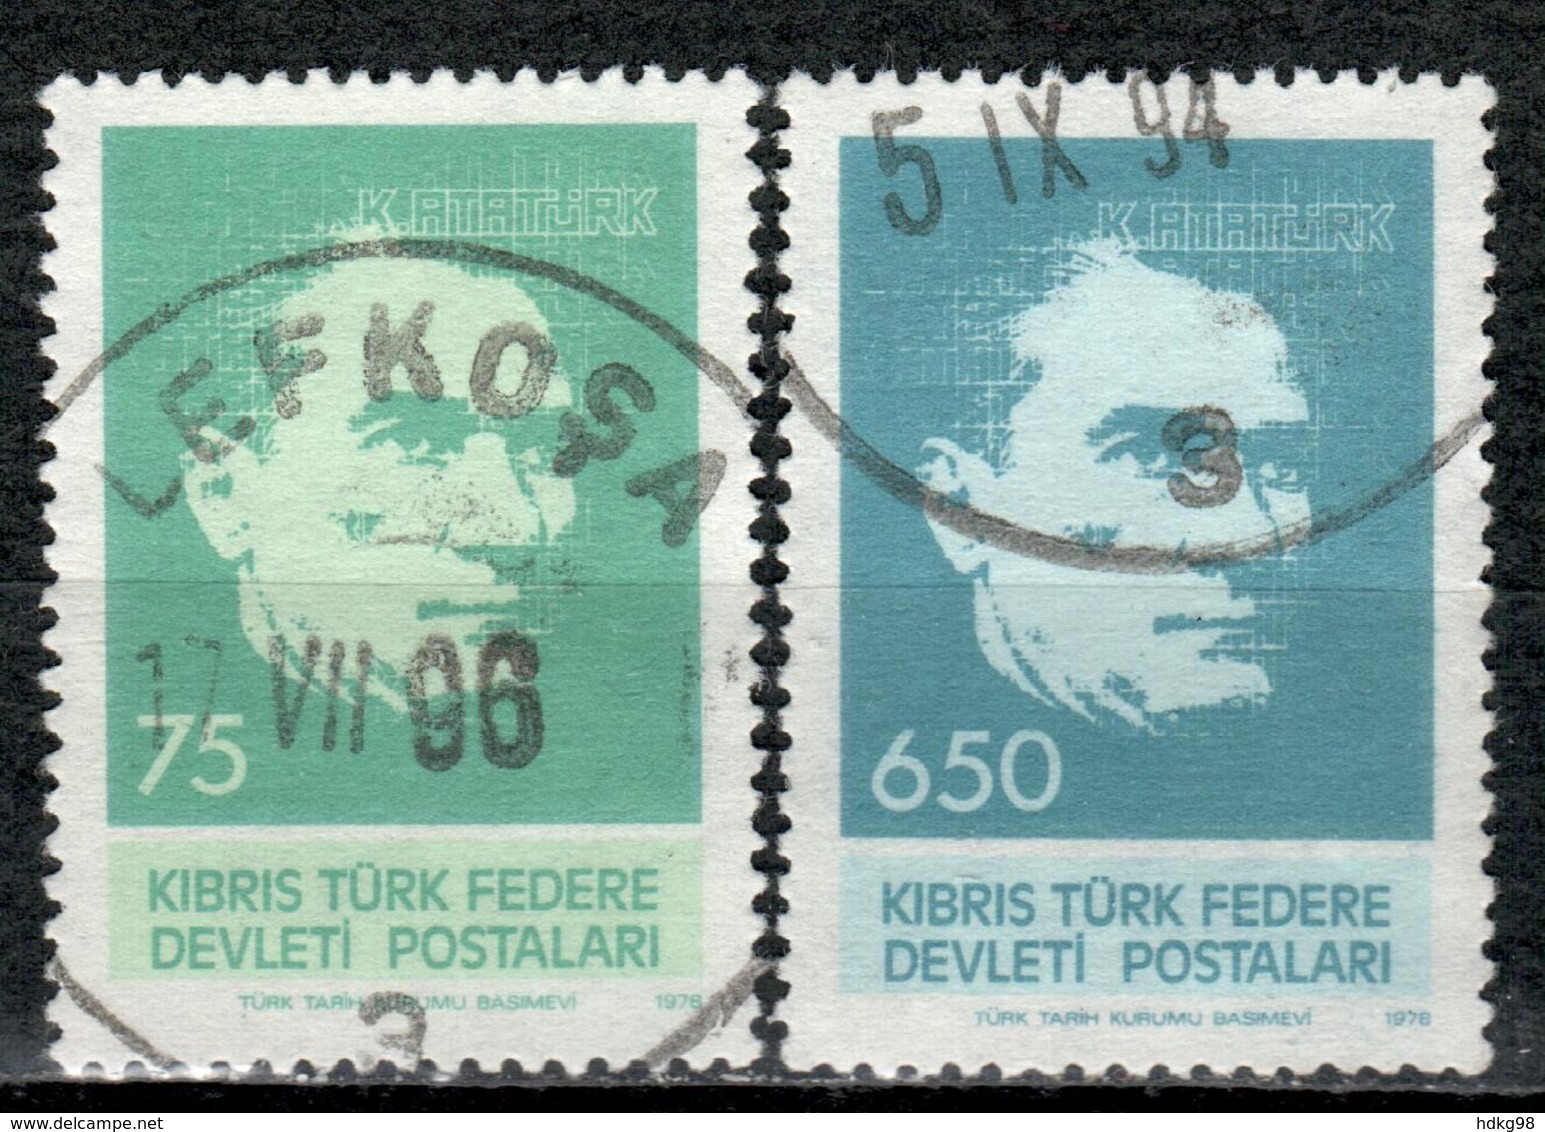 CY TR+ Türkisch Zypern 1978 Mi 63 65 Atatürk - Used Stamps